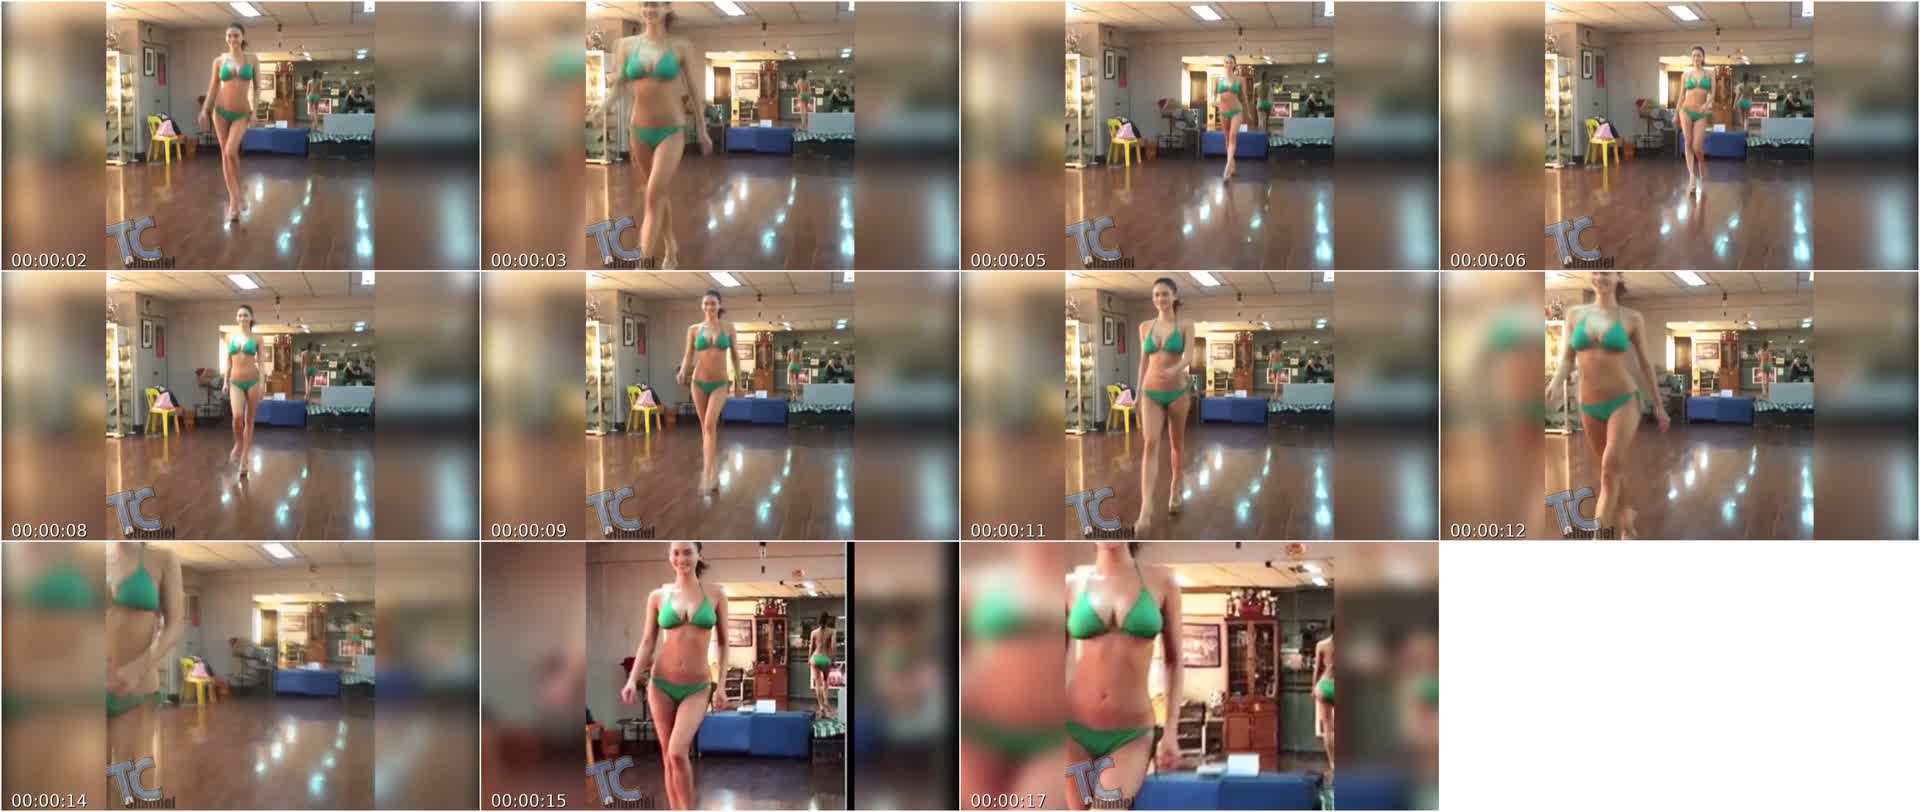 Pia Wurtzbach Practicing Her Walk In Green Two Piece Bikini – Miss Universe 2015 Winner